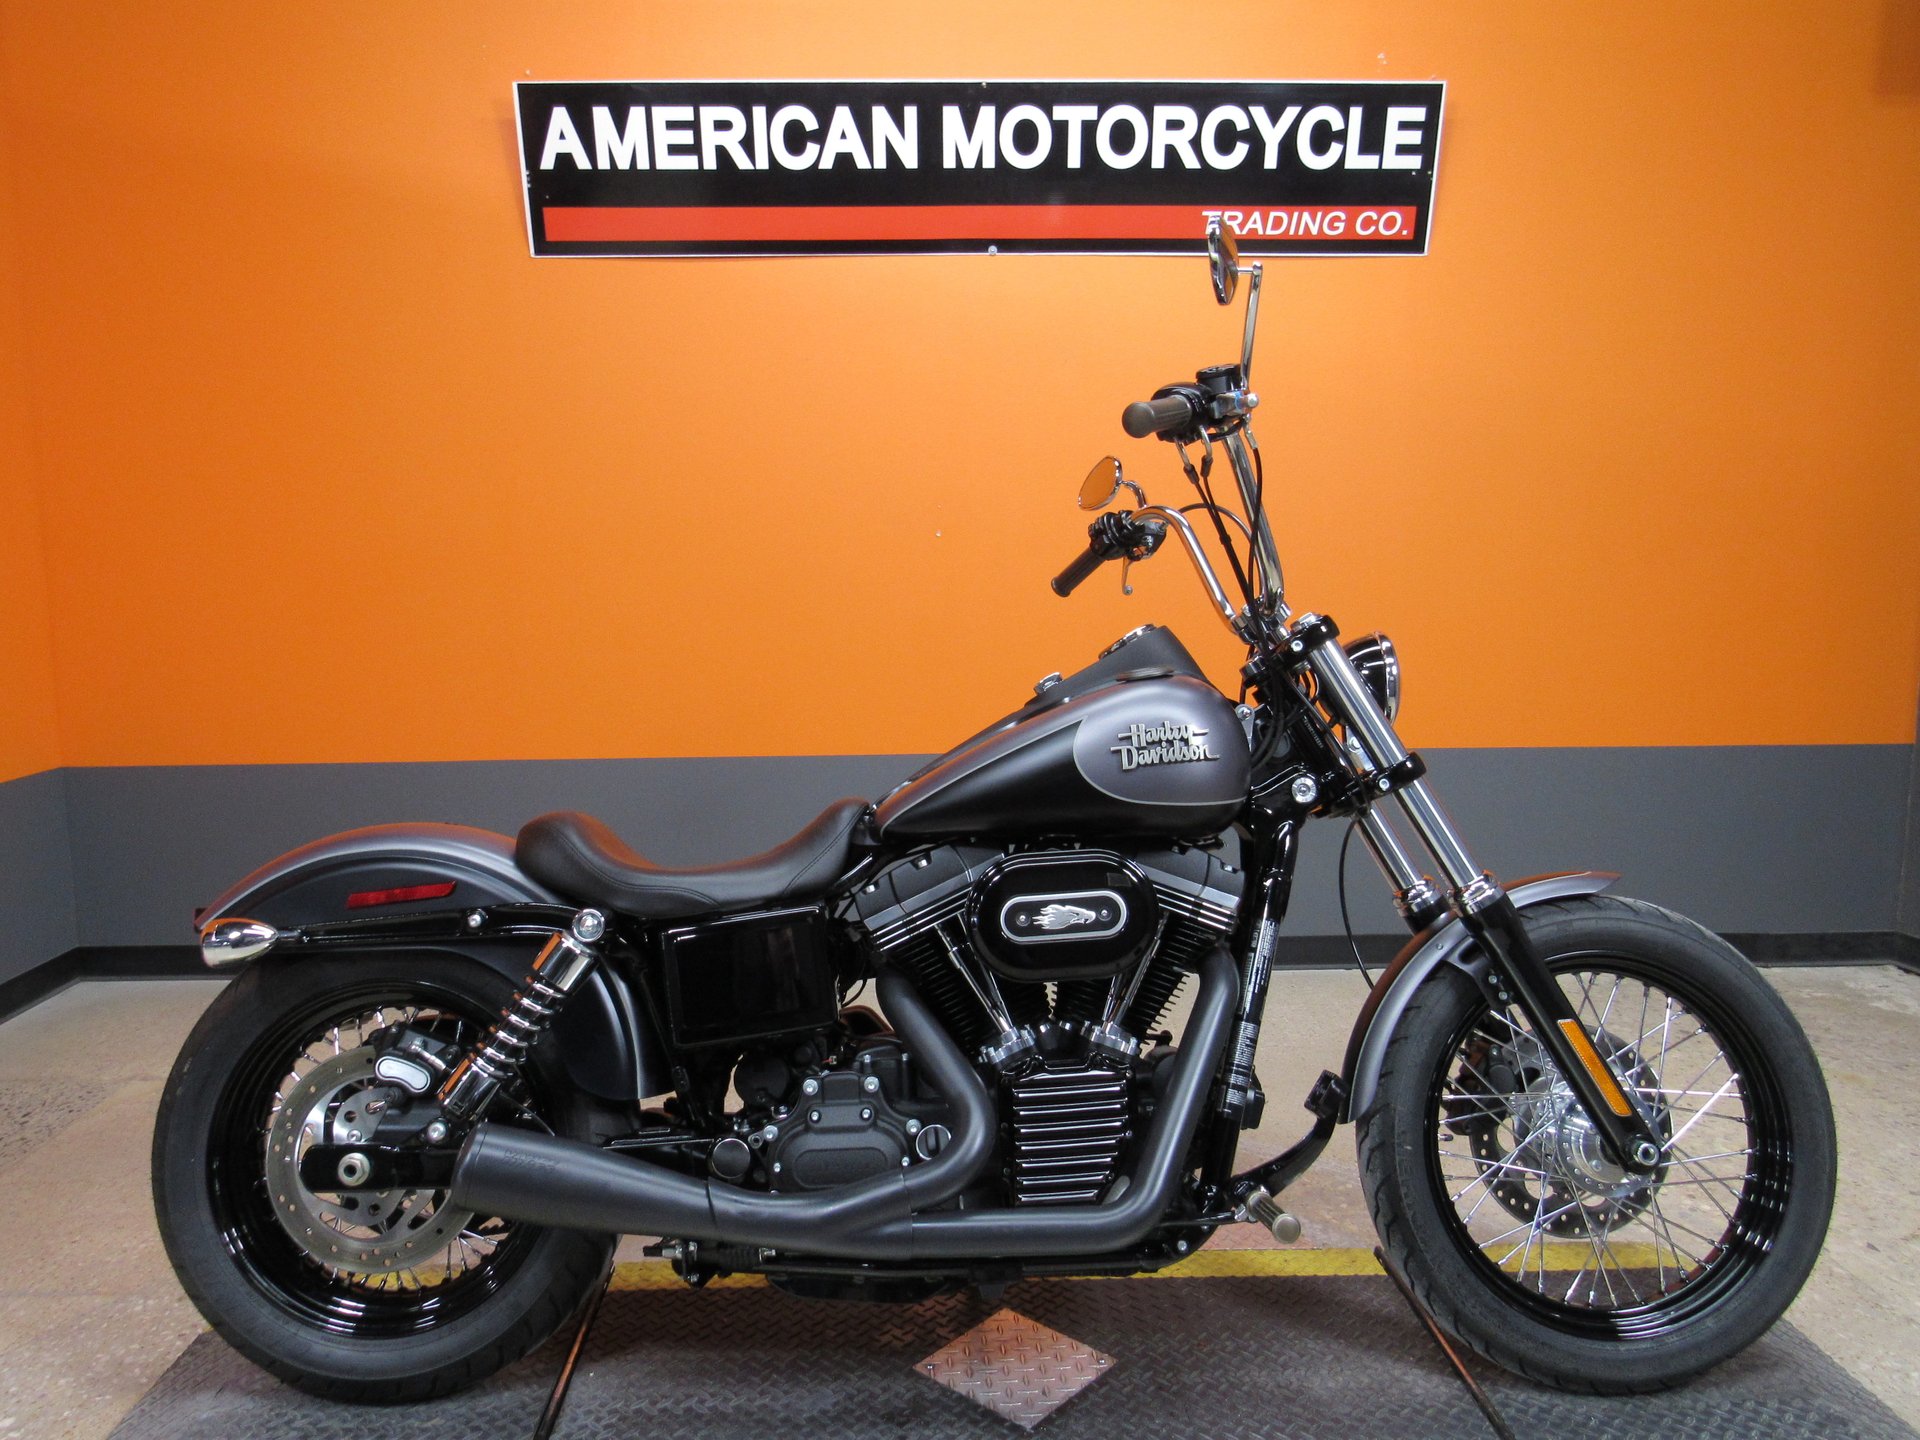 2017 Harley Davidson Dyna Street Bob American Motorcycle Trading Company Used Harley Davidson Motorcycles